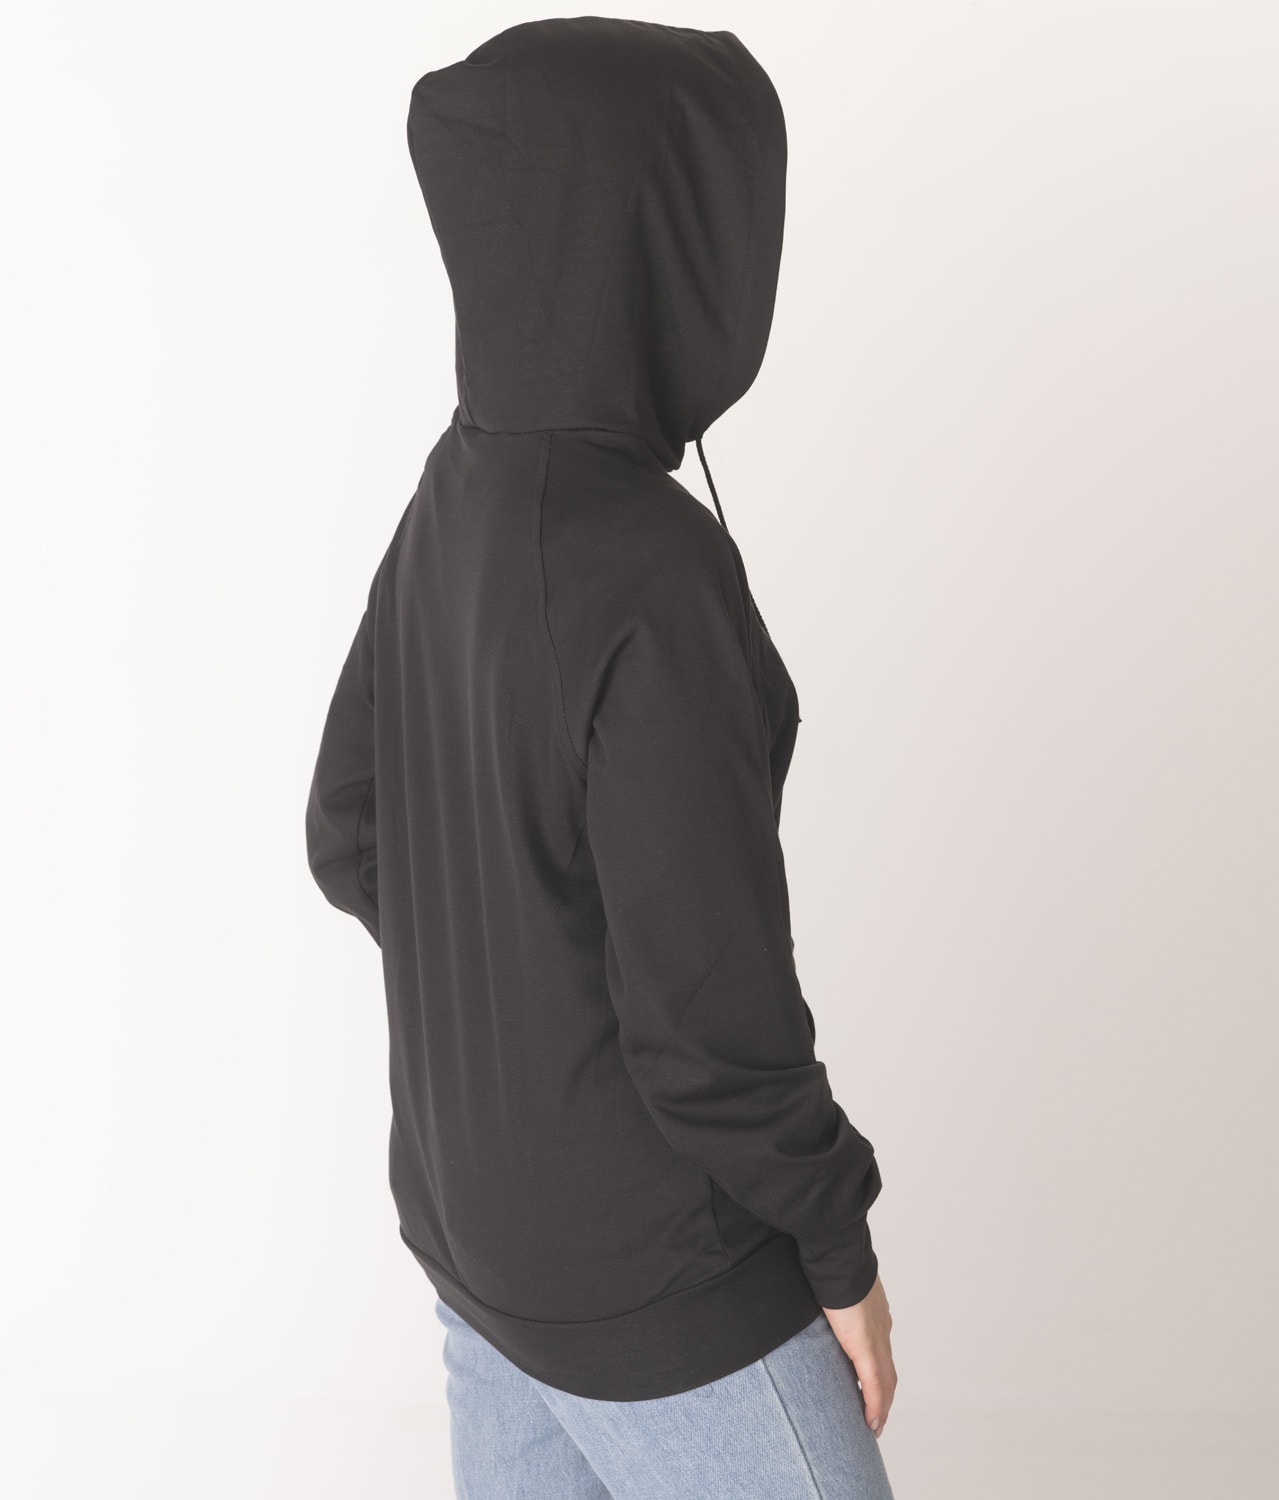 Leblok® EMF Shielding Hoodie for Women